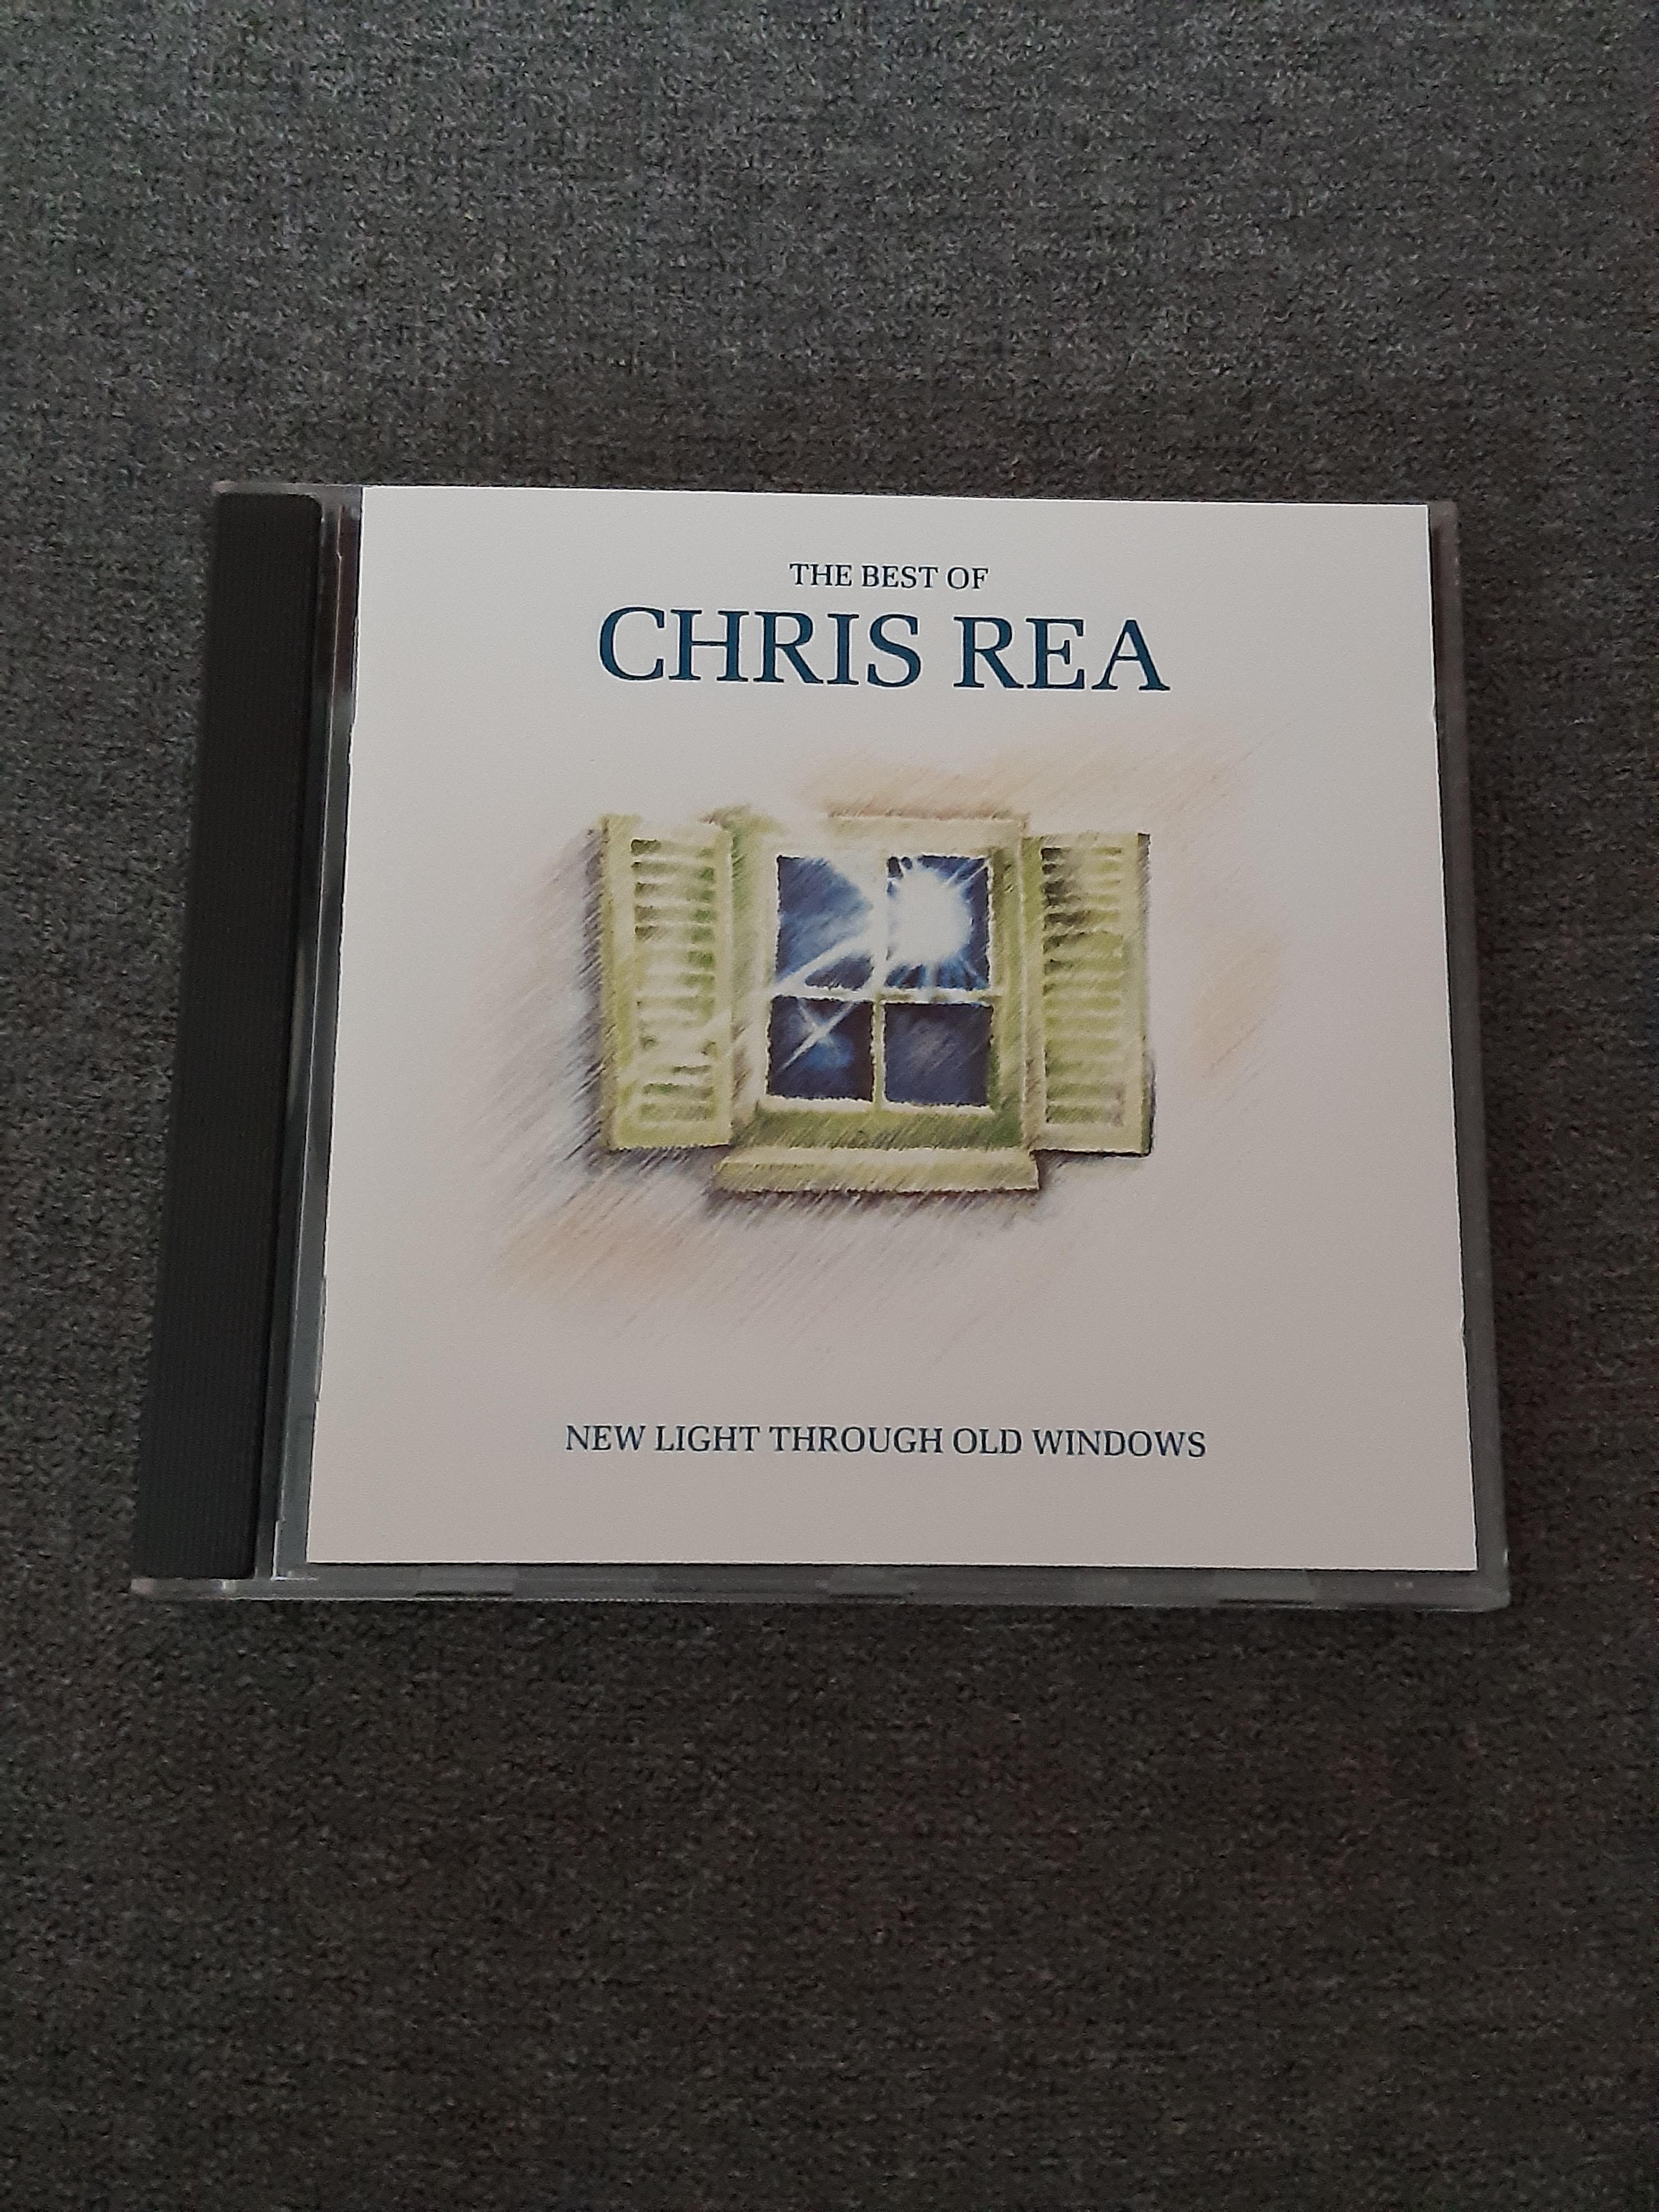 Chris Rea - The Best Of, New Light Through Old Windows - CD (käytetty)